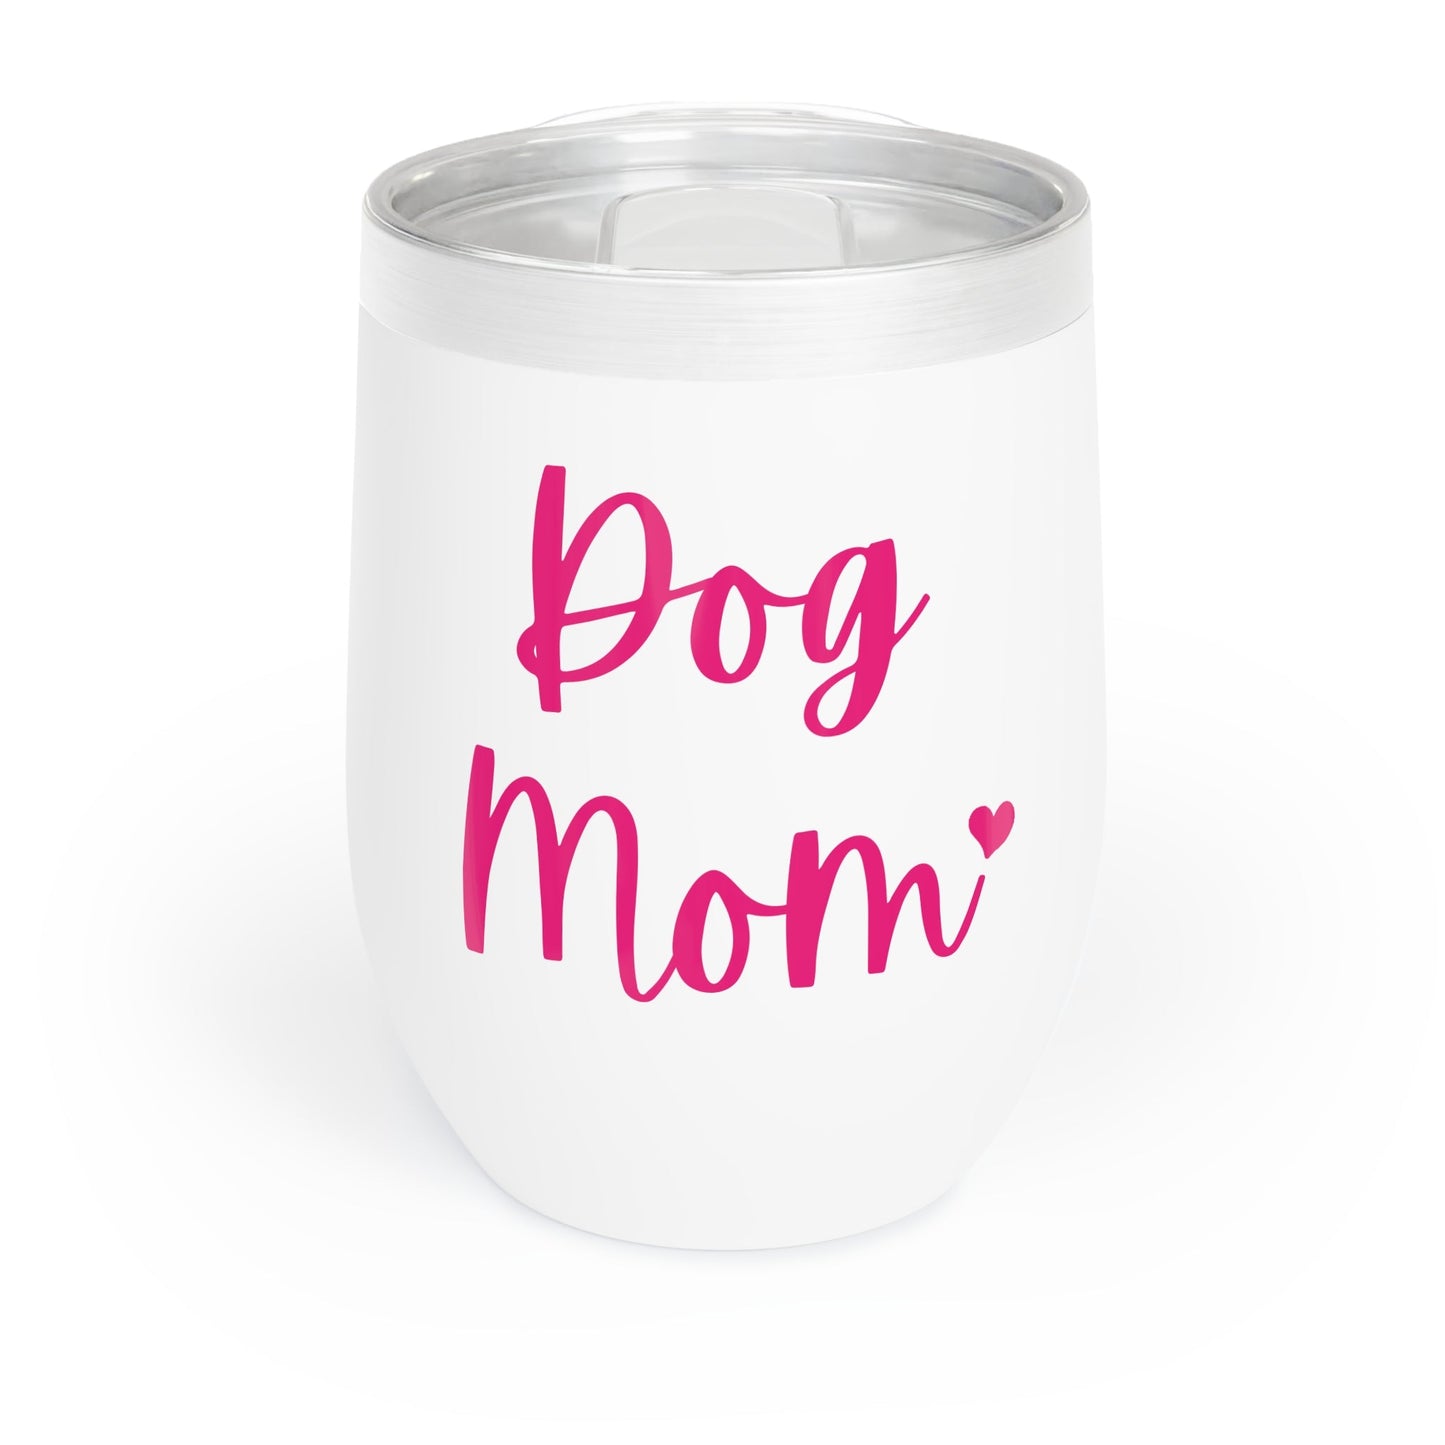 Dog Mom | Wine Tumbler - Detezi Designs-11305223360550098150